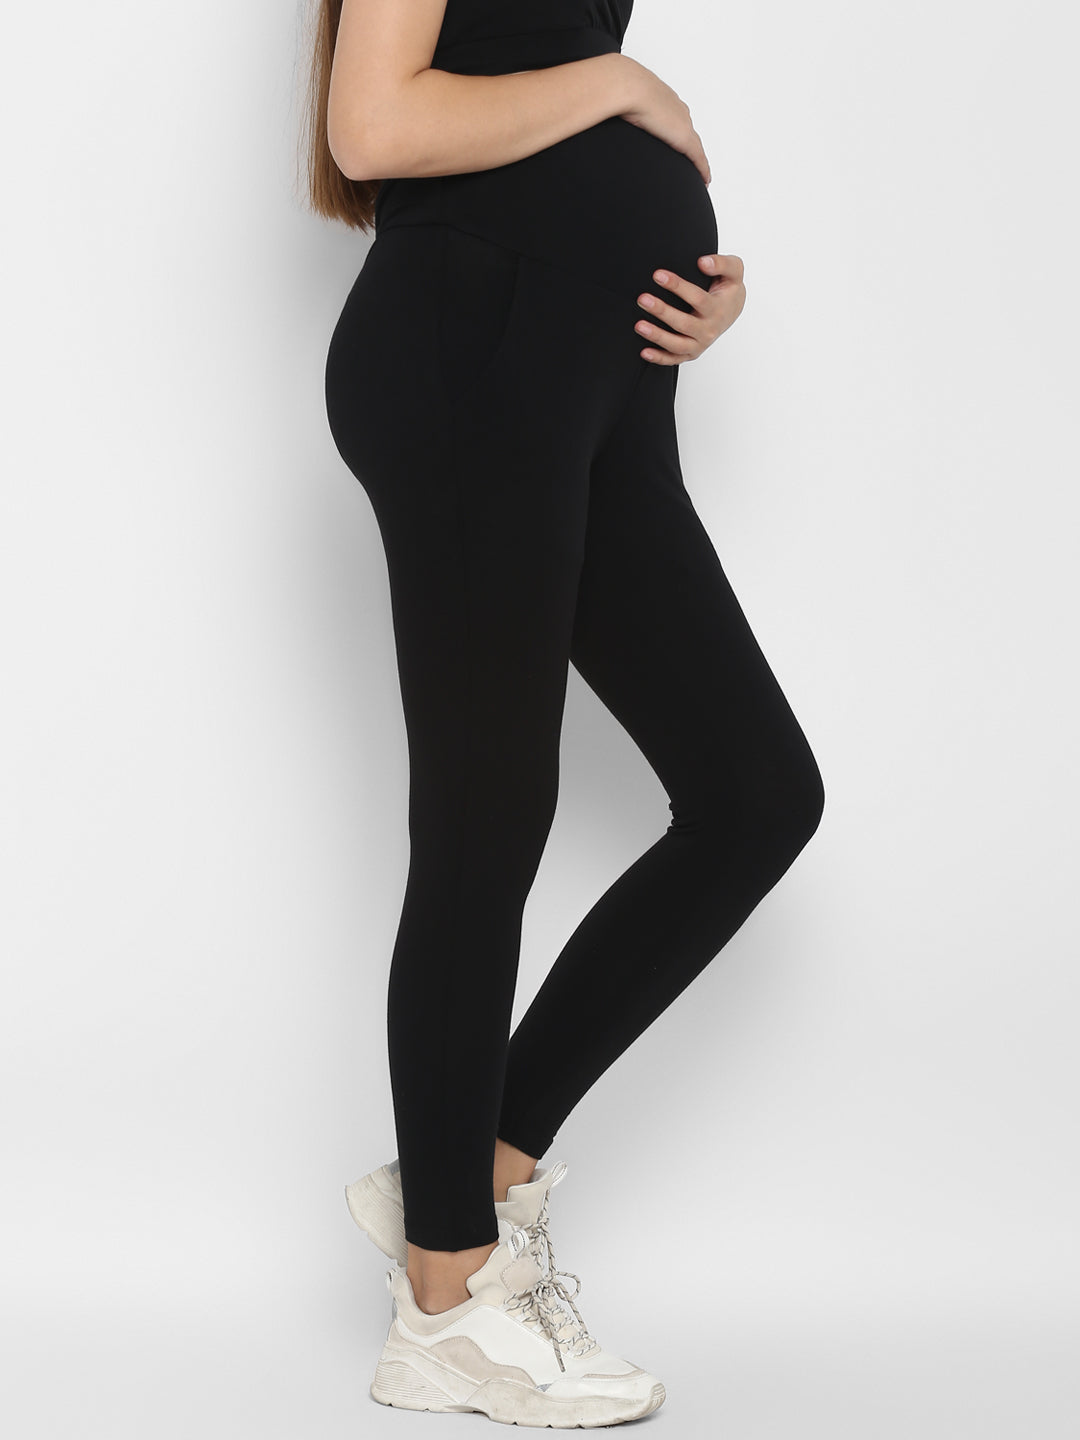 Tall Women's LTS Maternity Black Cotton Leggings